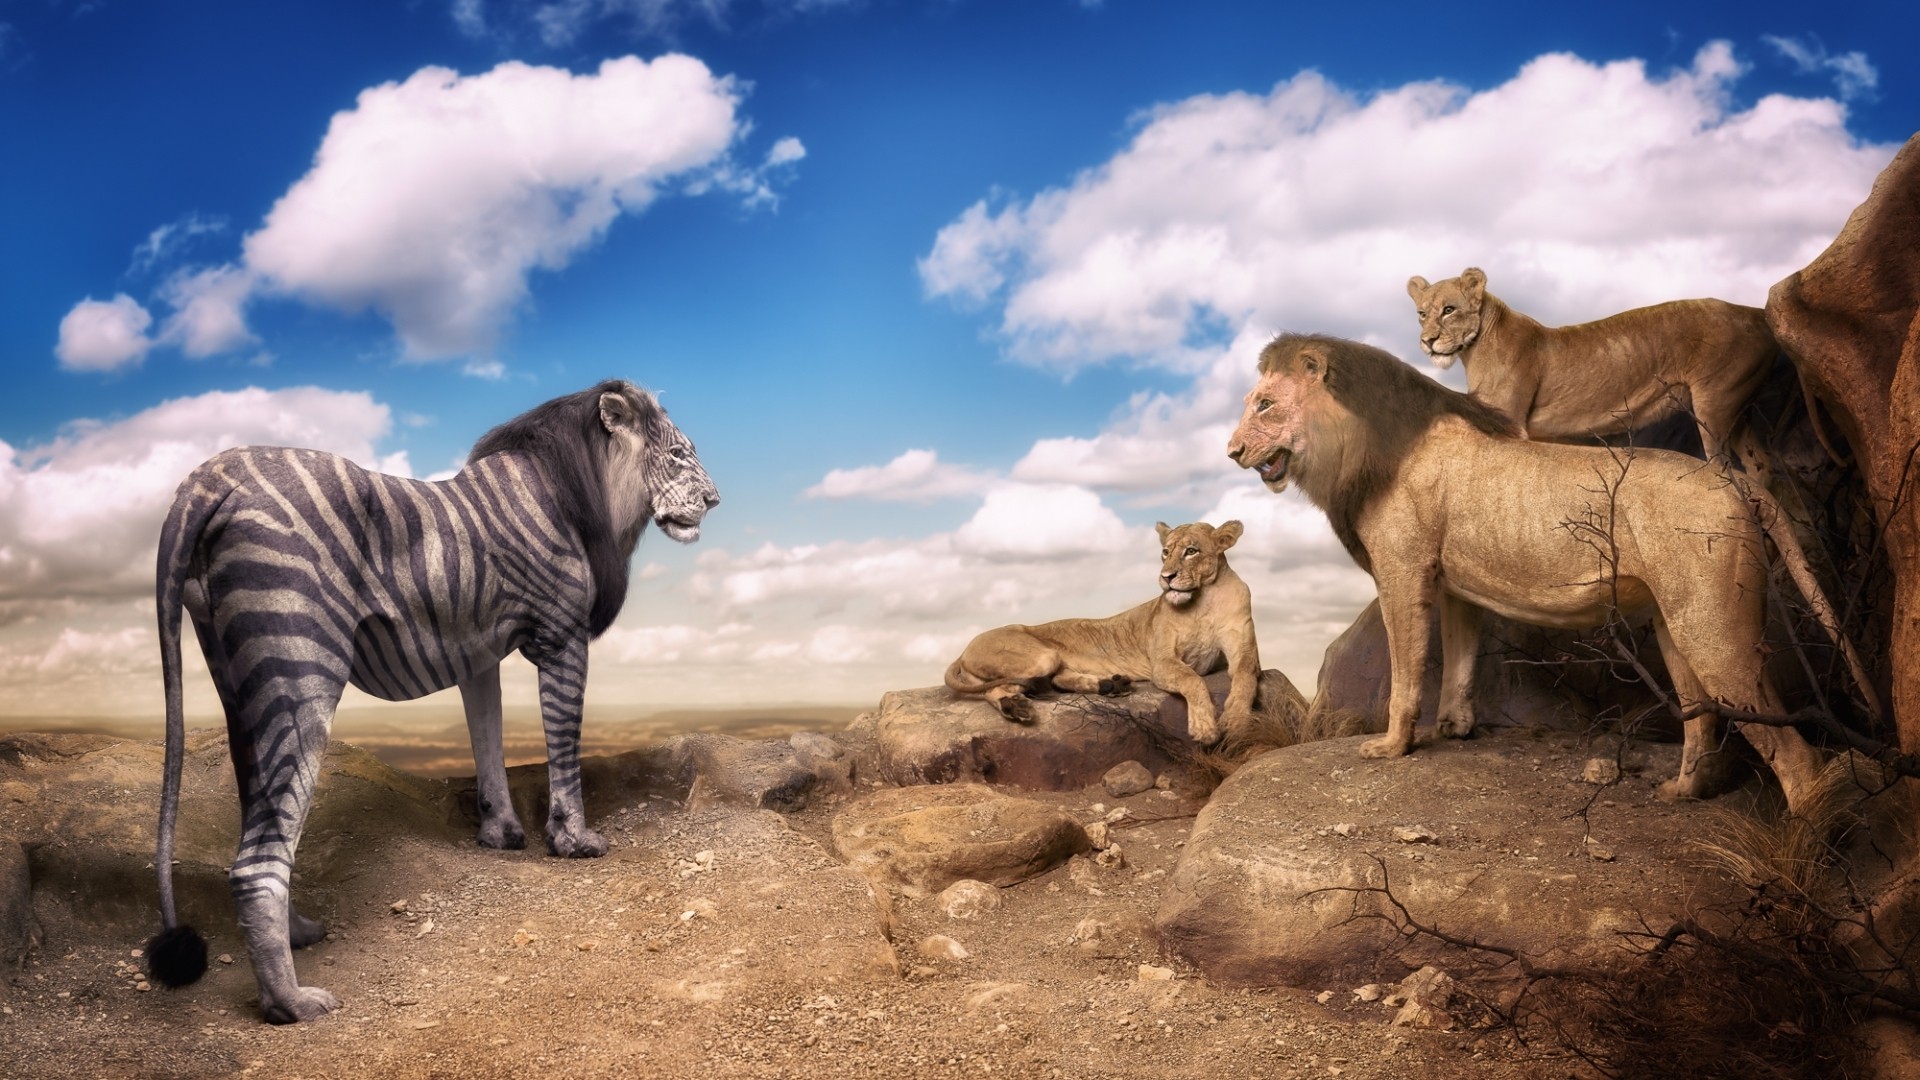 Nature Animals Digital Art Photo Manipulation Humor Lion Zebras Rock Trees Clouds Laughing 1920x1080